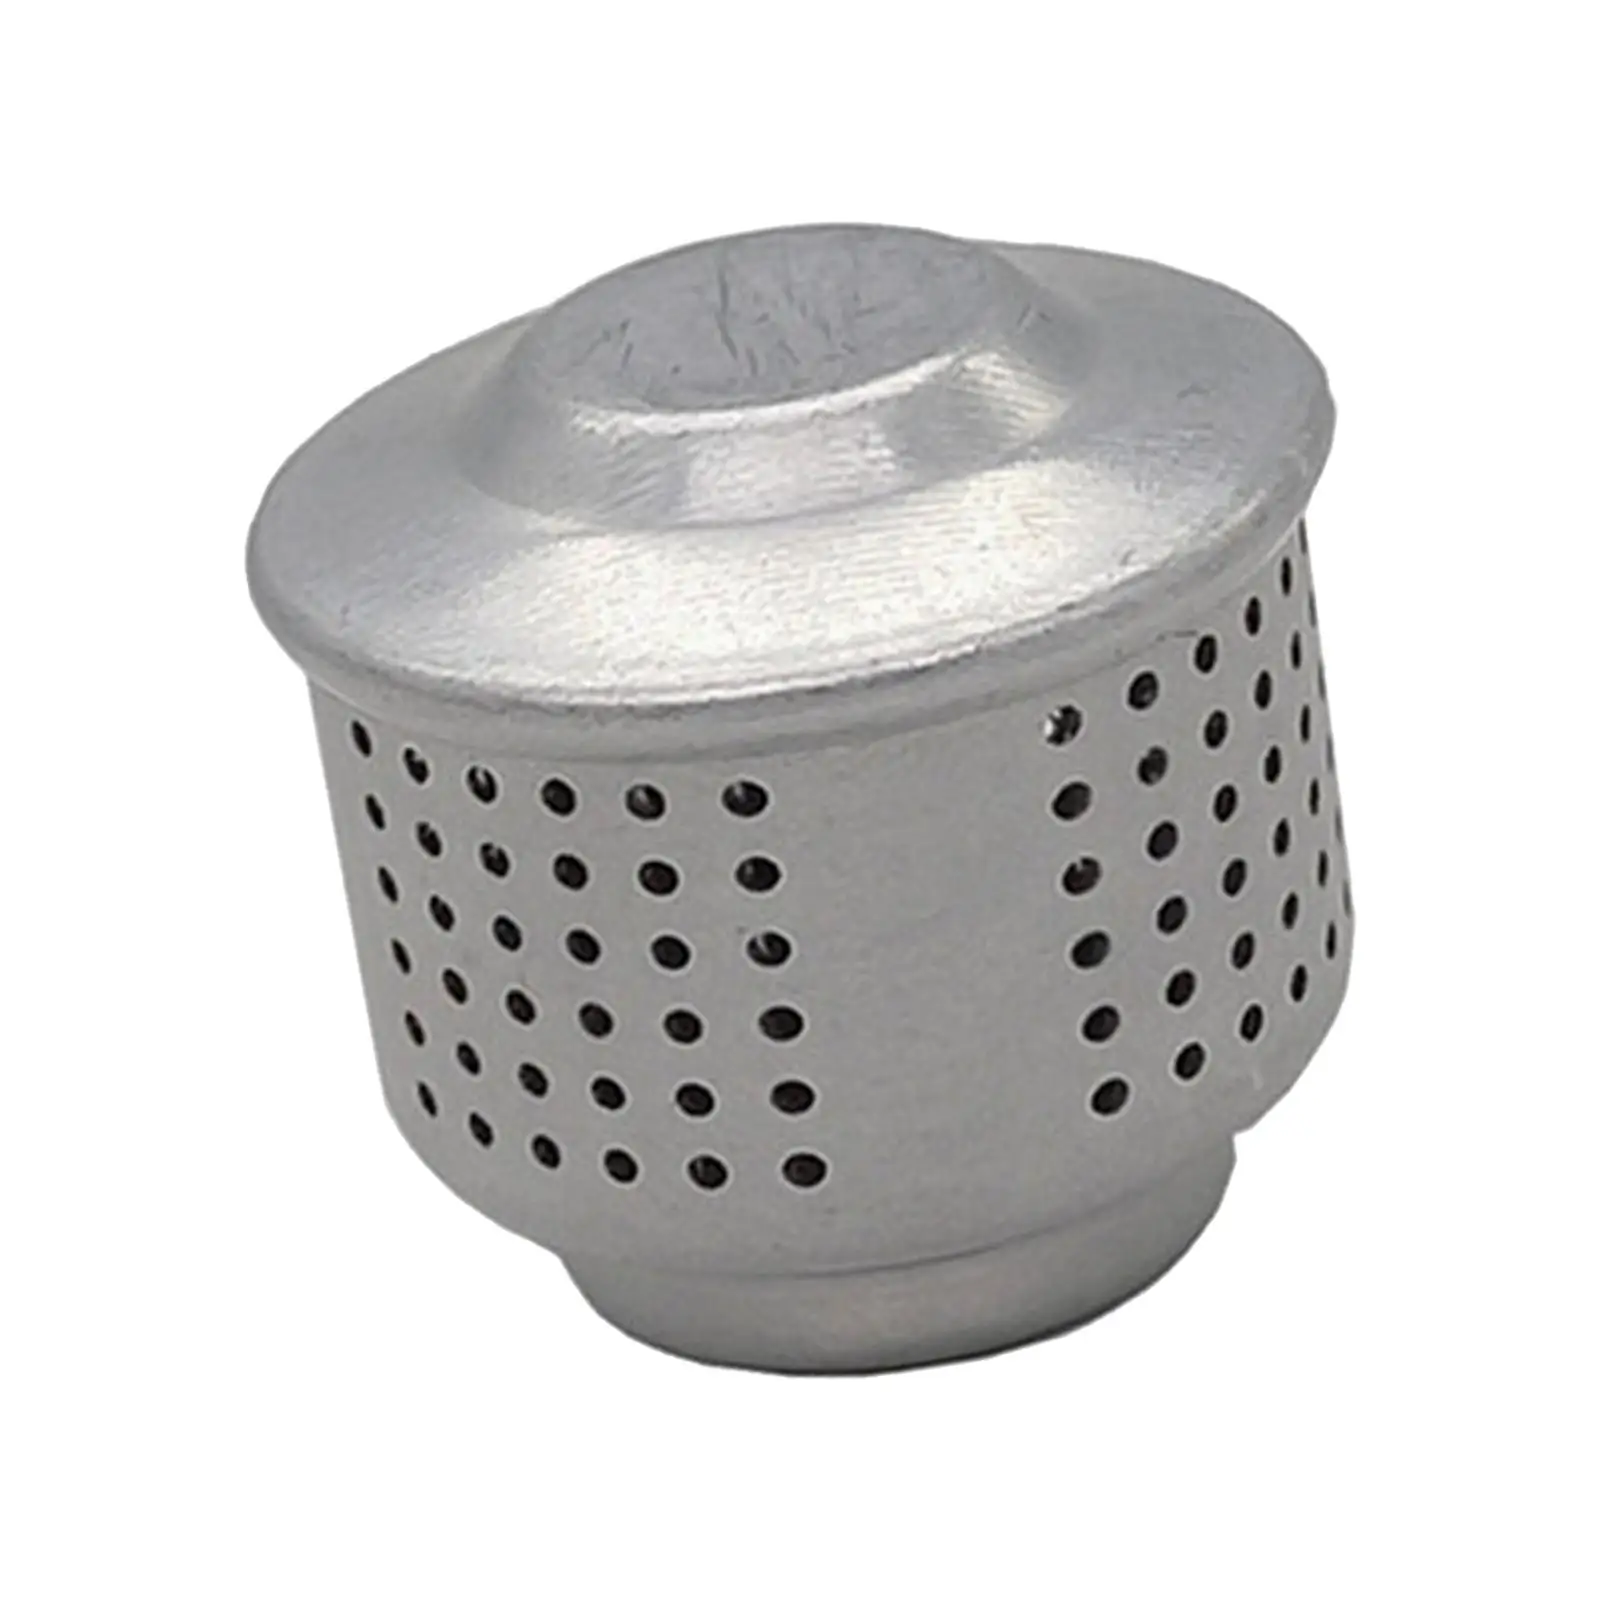 Aluminum Moka Coffee Pot Splashing Proof Cover Professional Sturdy Universal